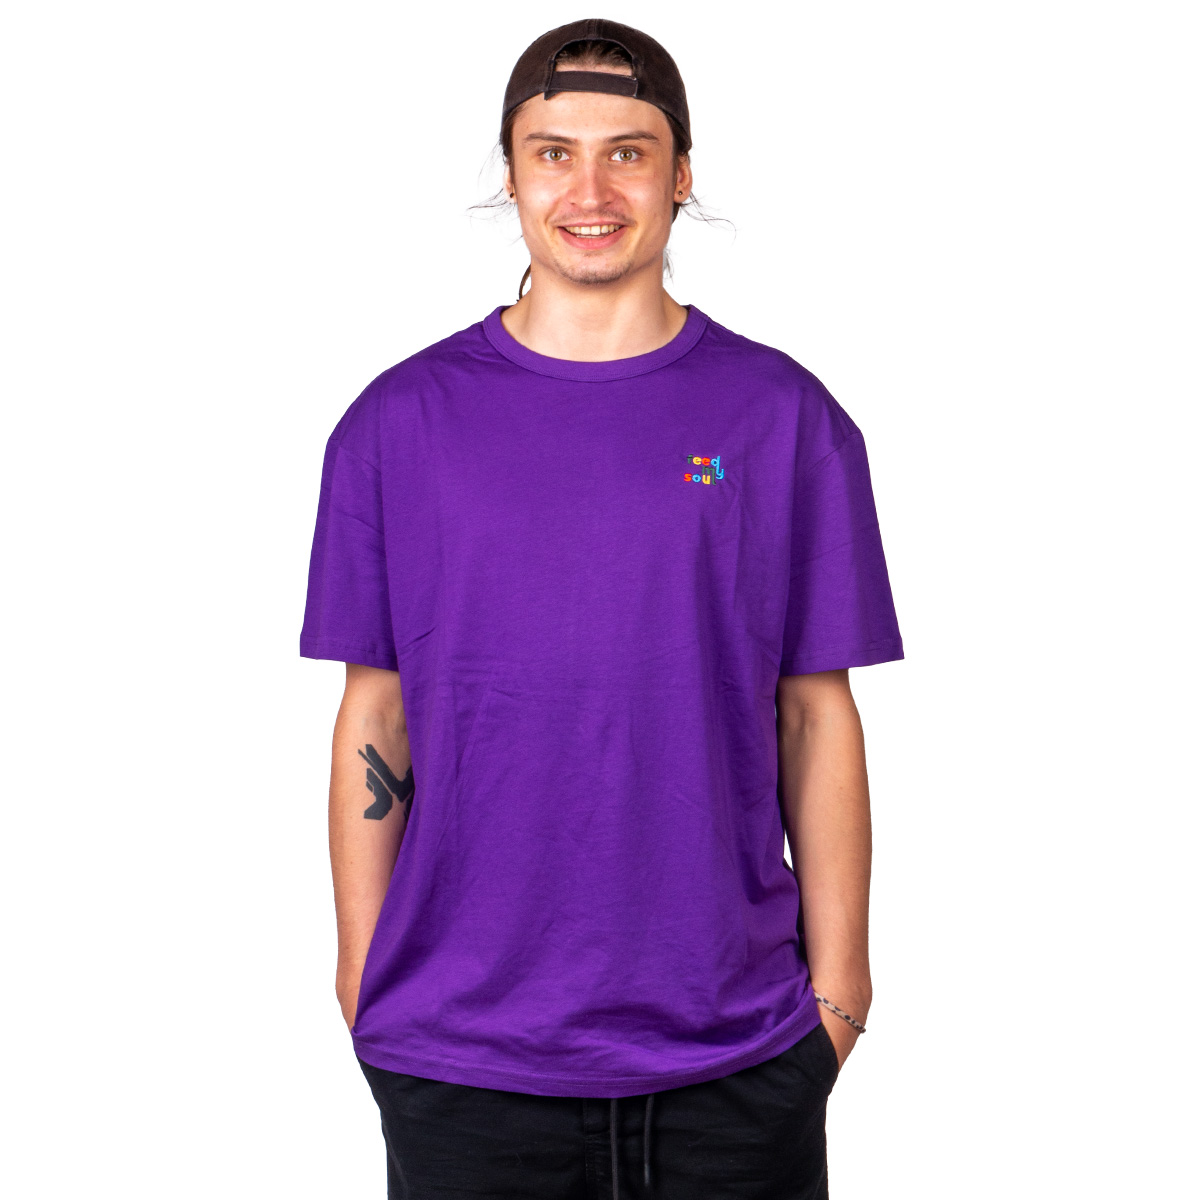 Feedmysoul T-Shirt Colour Emb (purple)